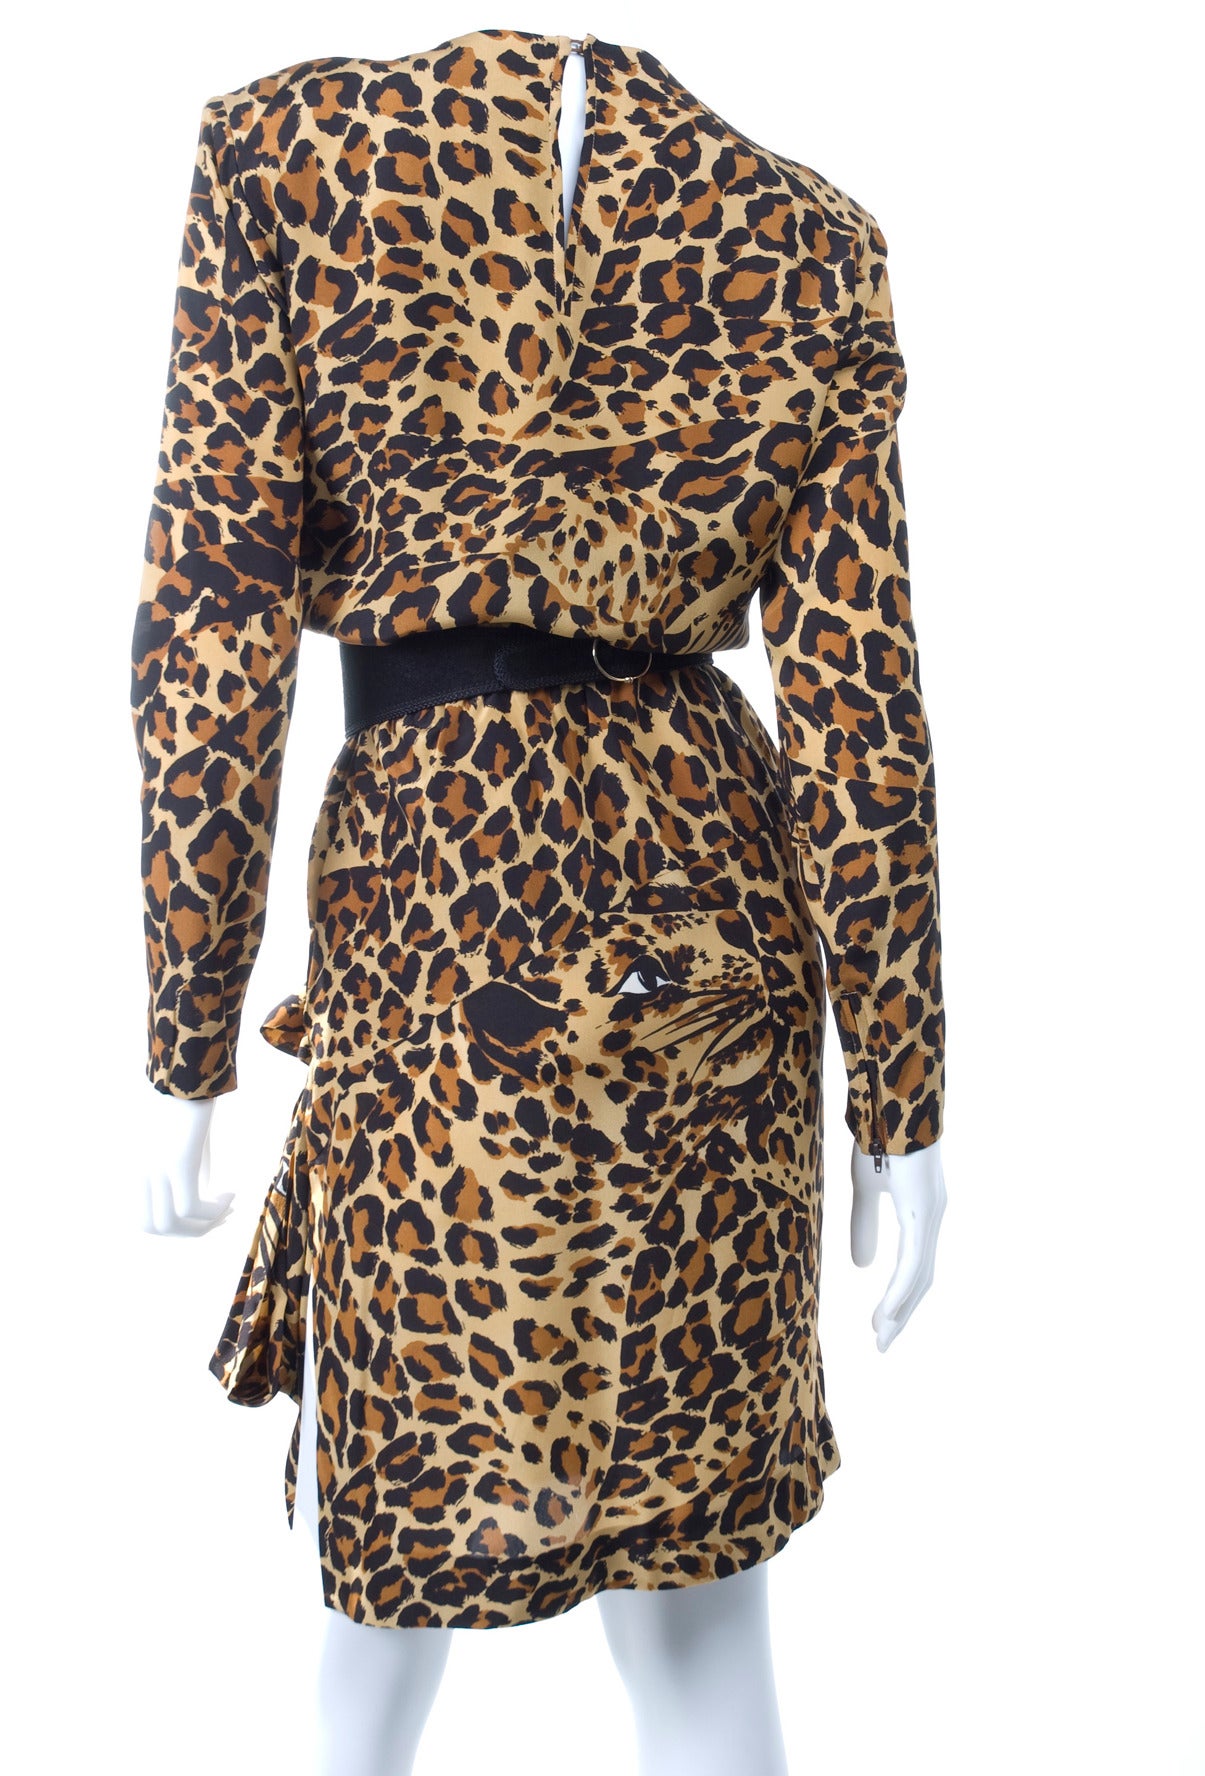 Iconic Vintage Yves Saint Laurent Silk Leopard Print Dress In Excellent Condition For Sale In Hamburg, Deutschland